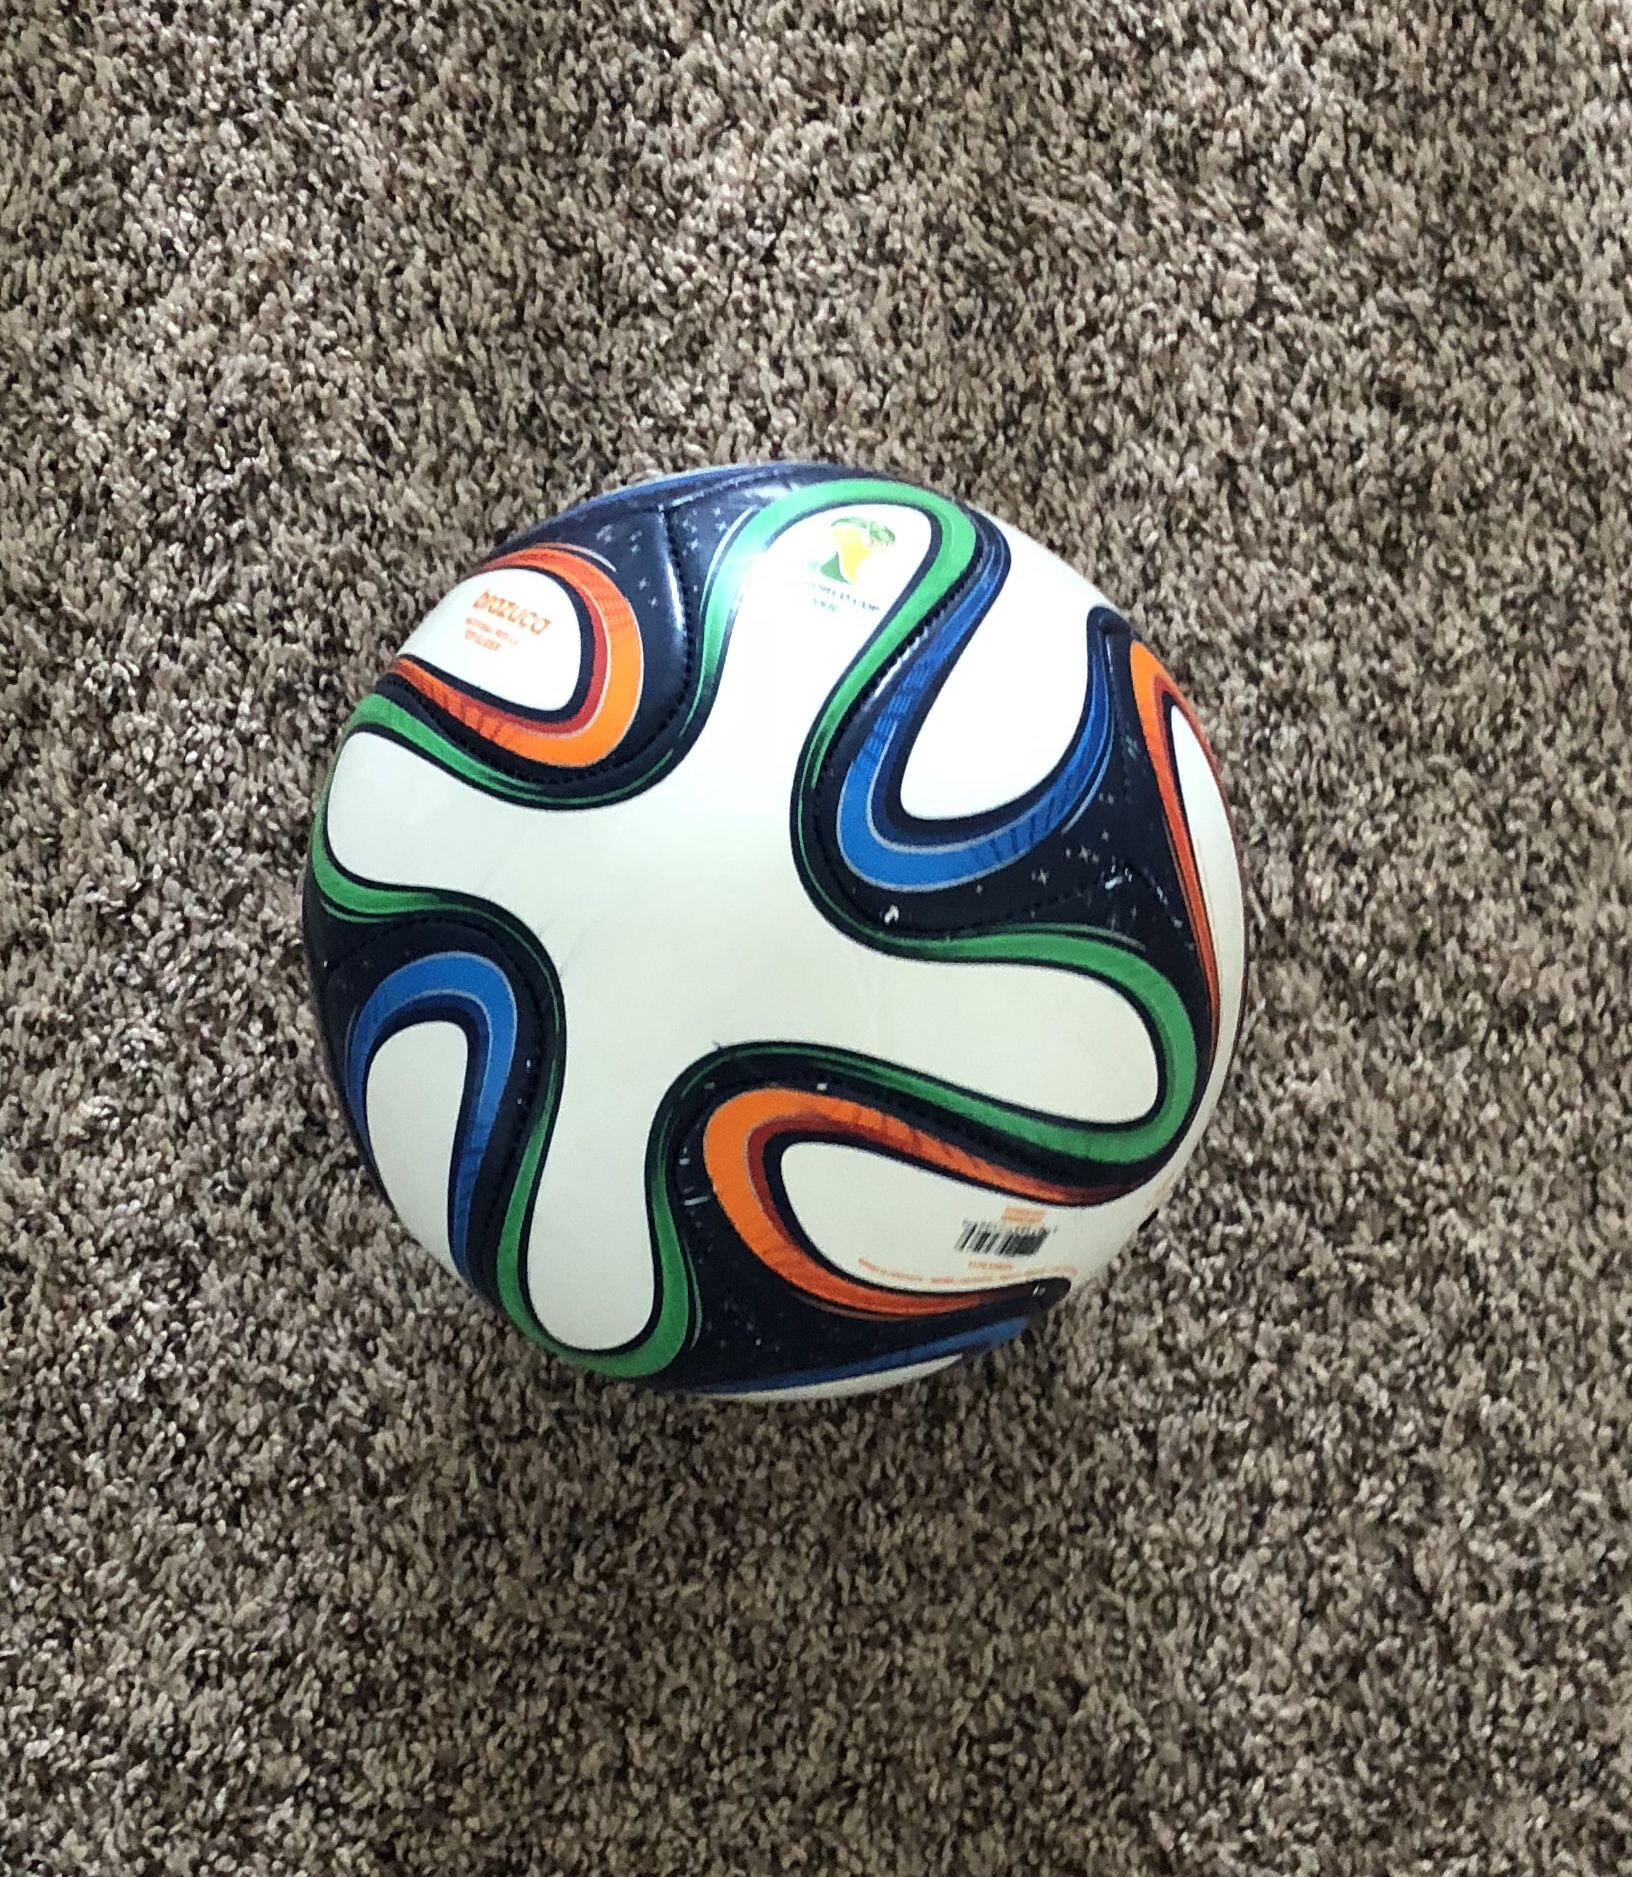 2014 Adidas World Cup soccer ball